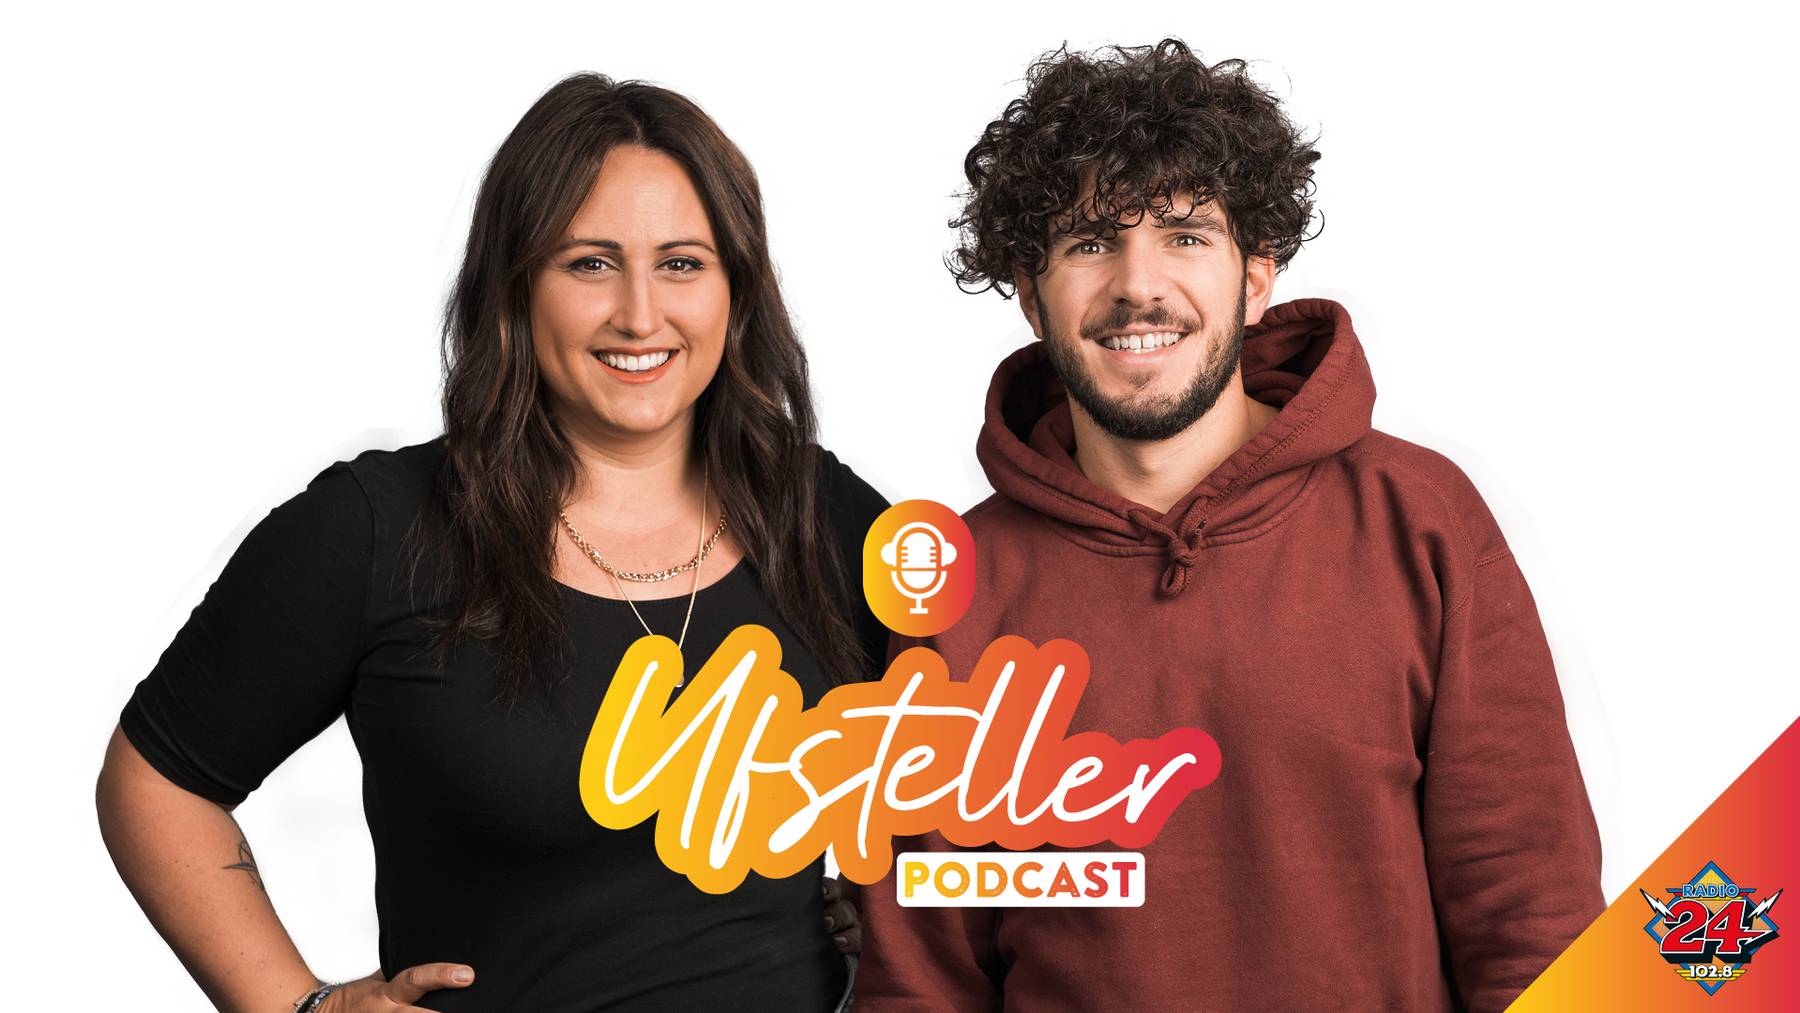 Ufsteller-Podcast_1920x1080px